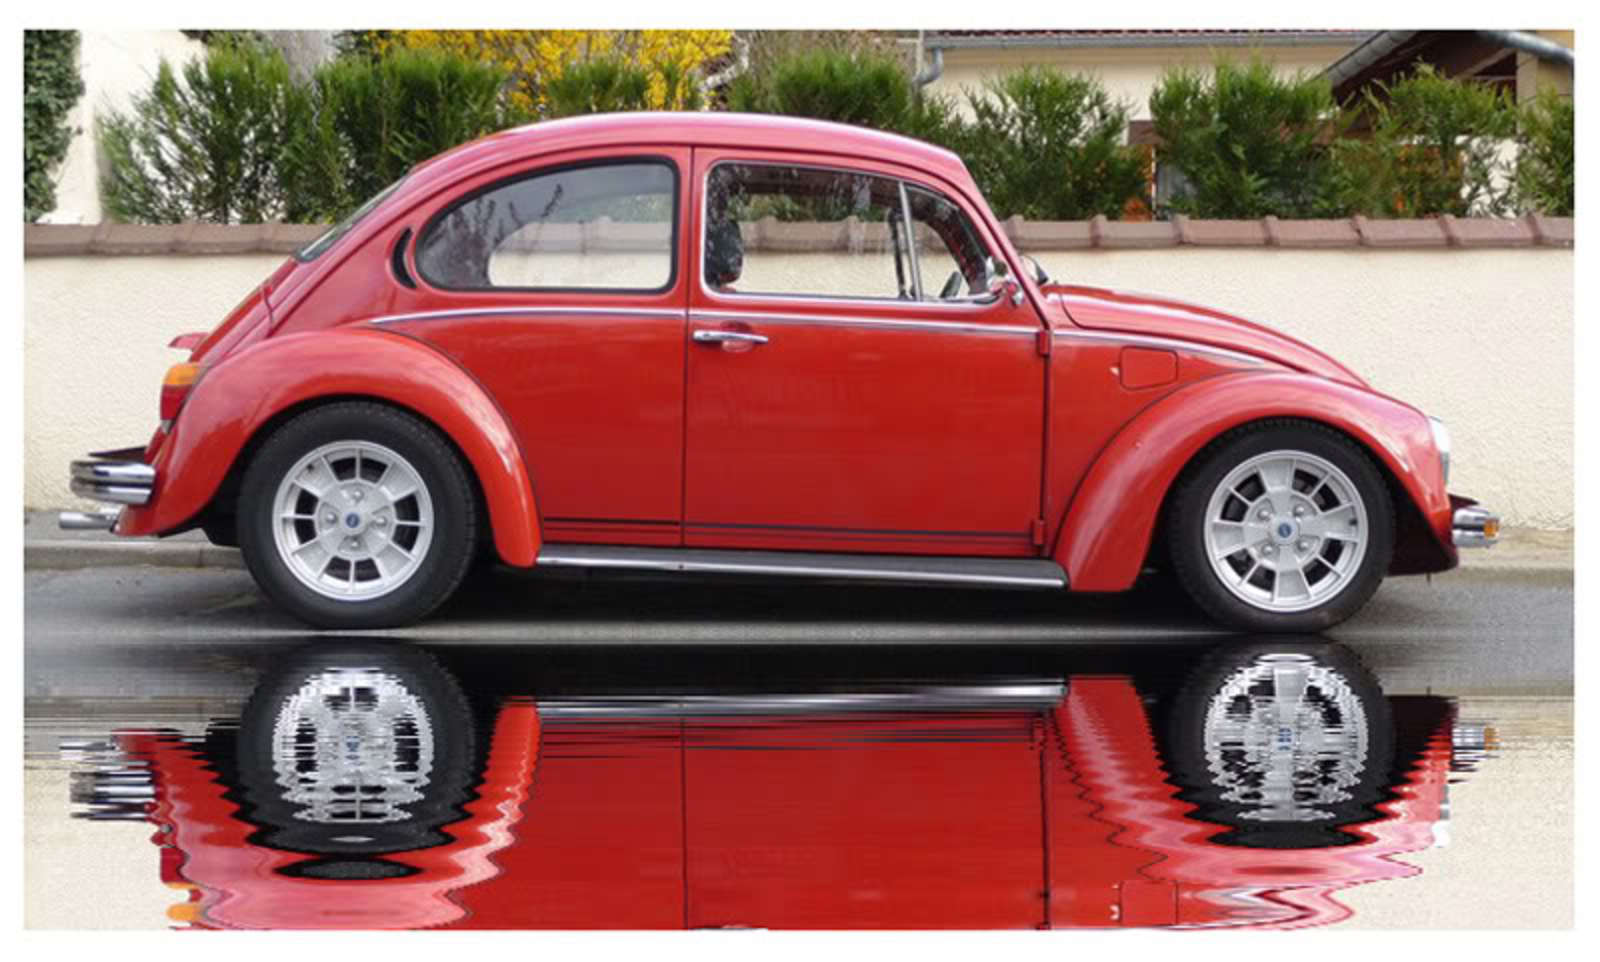 Pin Volkswagen Buggy 1300 Photos on Pinterest